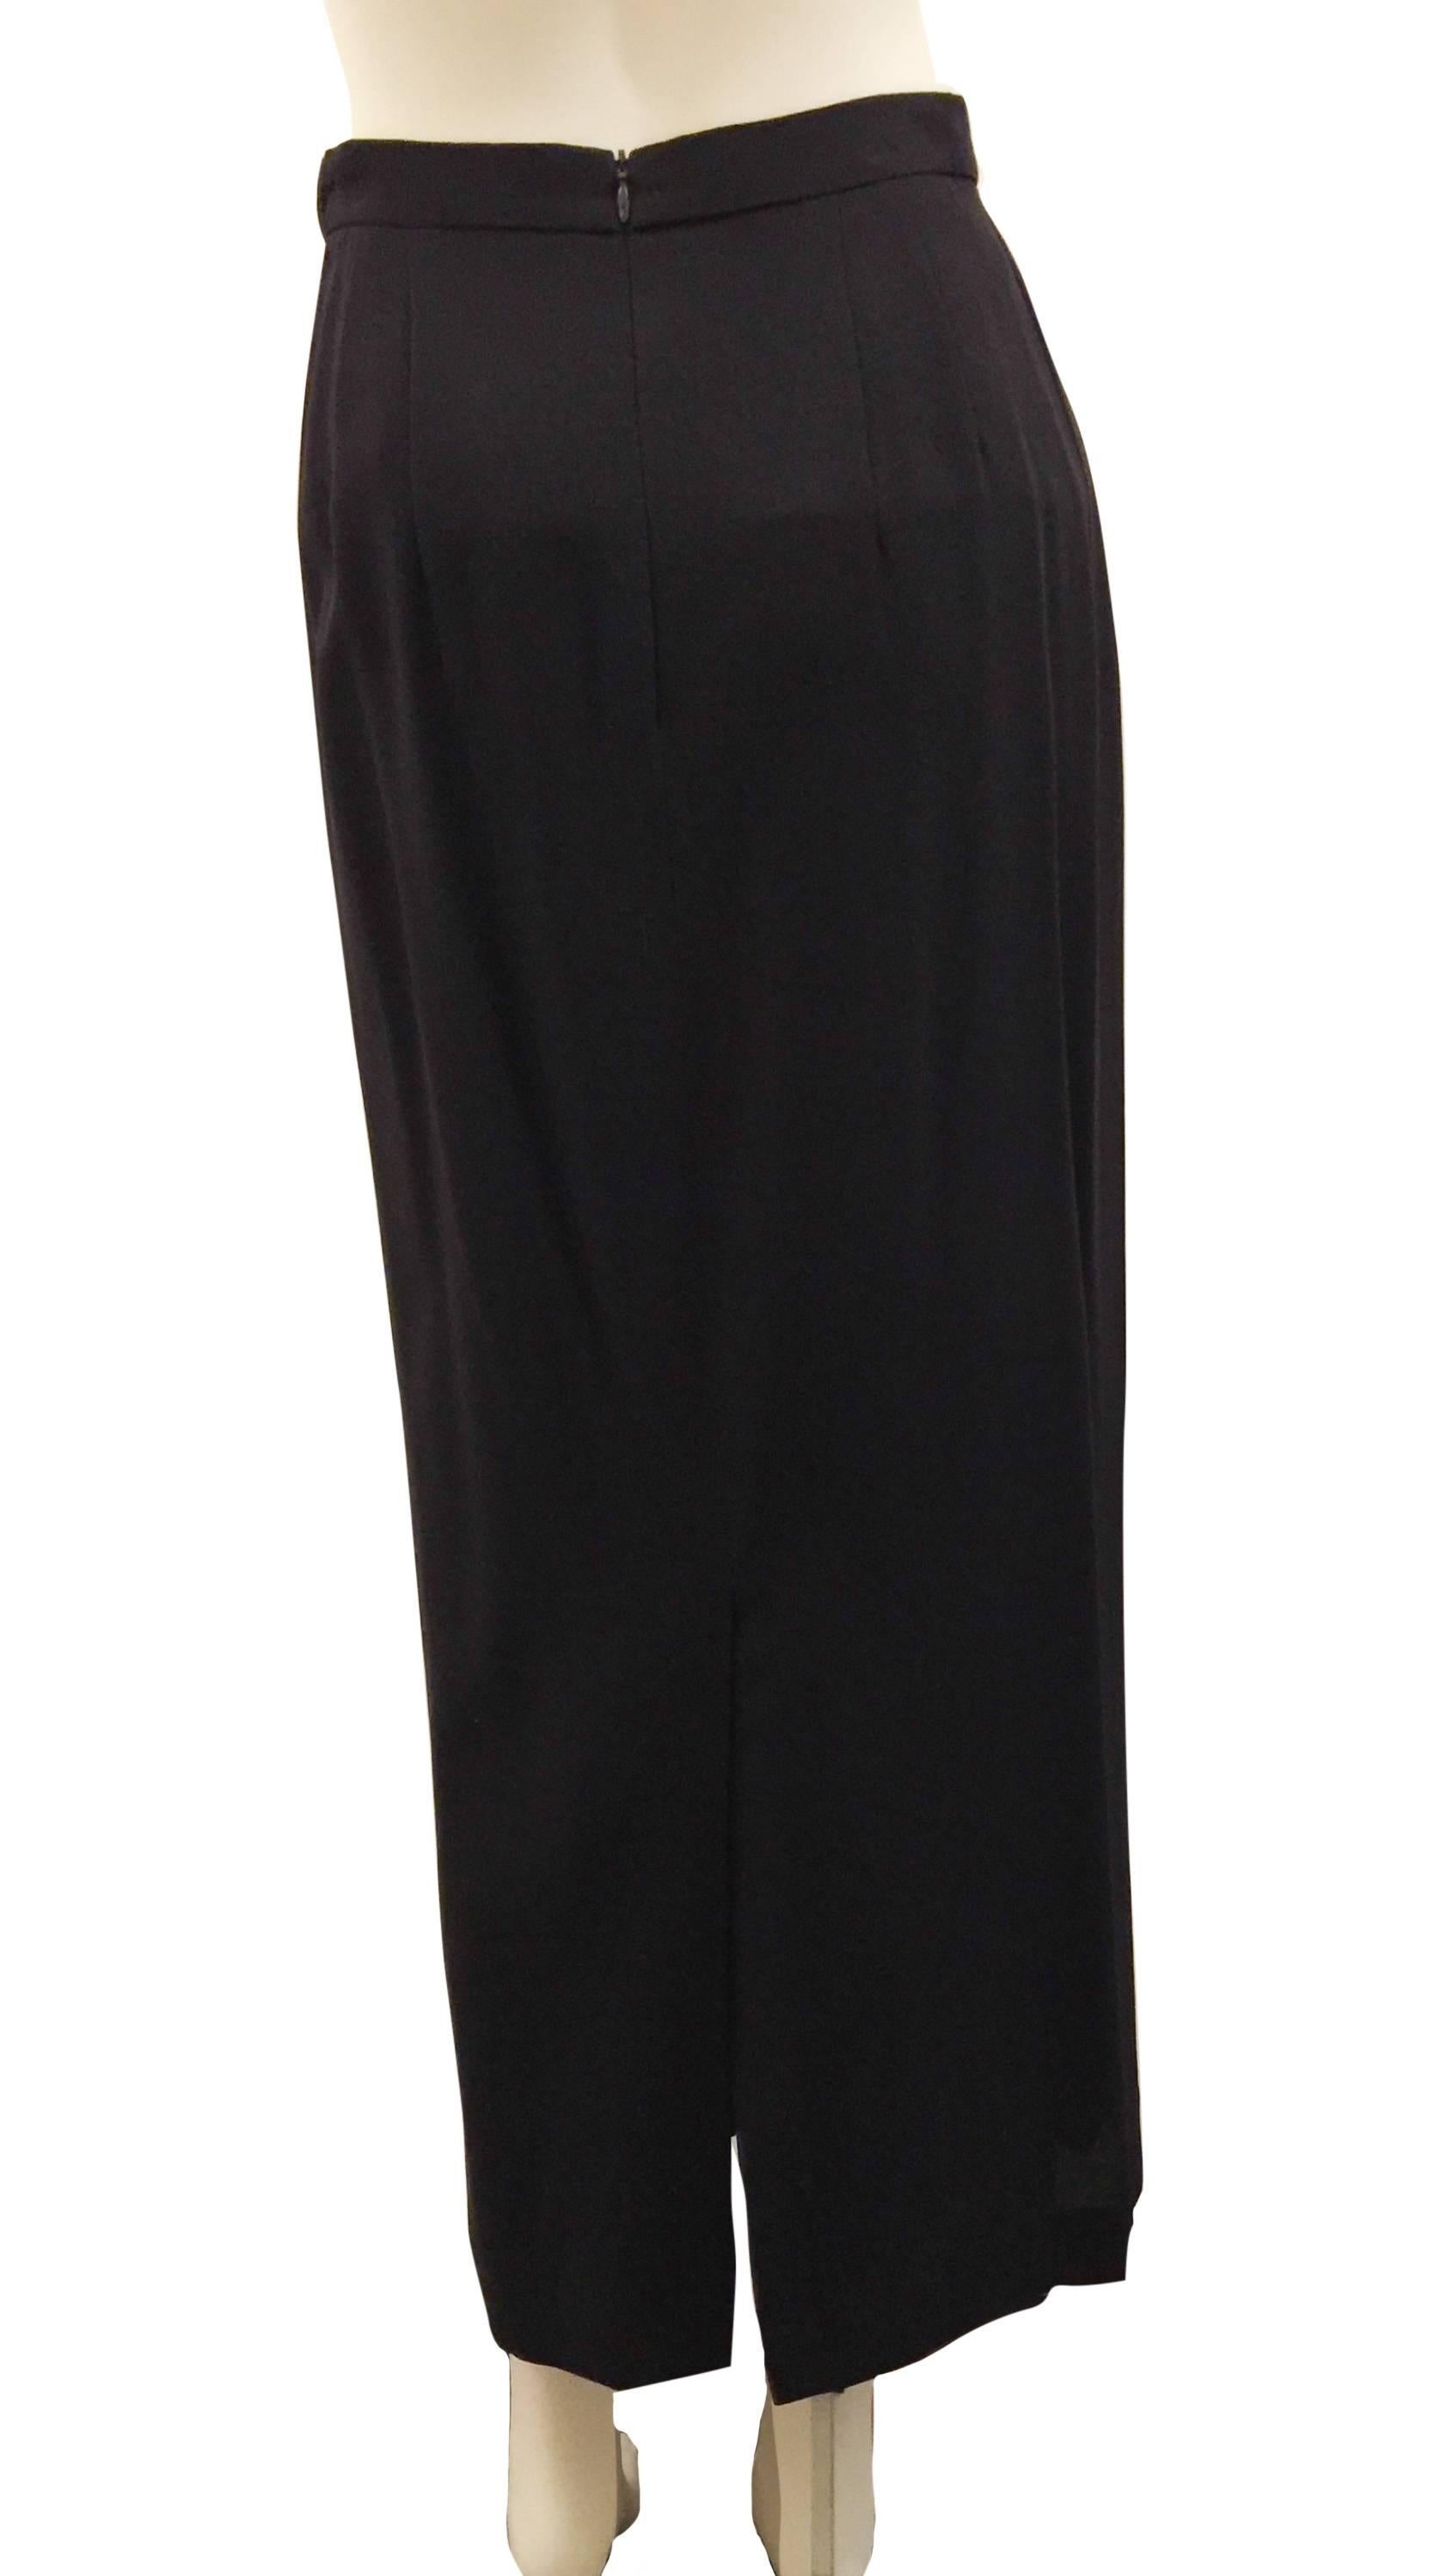 Jil Sander Navy Midi Skirt. Length 94cm/36.5in; Waist 70cm/27in; Vent 39cm/15in; Zip 22cm/8in.   Lining 100% Cupro. Size EU36.  Smart Slim Fitting Straight Midi Skirt.  Made in Italy.  Fabric is 65% Fleece Wool; 29% Viscose & 6% Nylon.  This smart